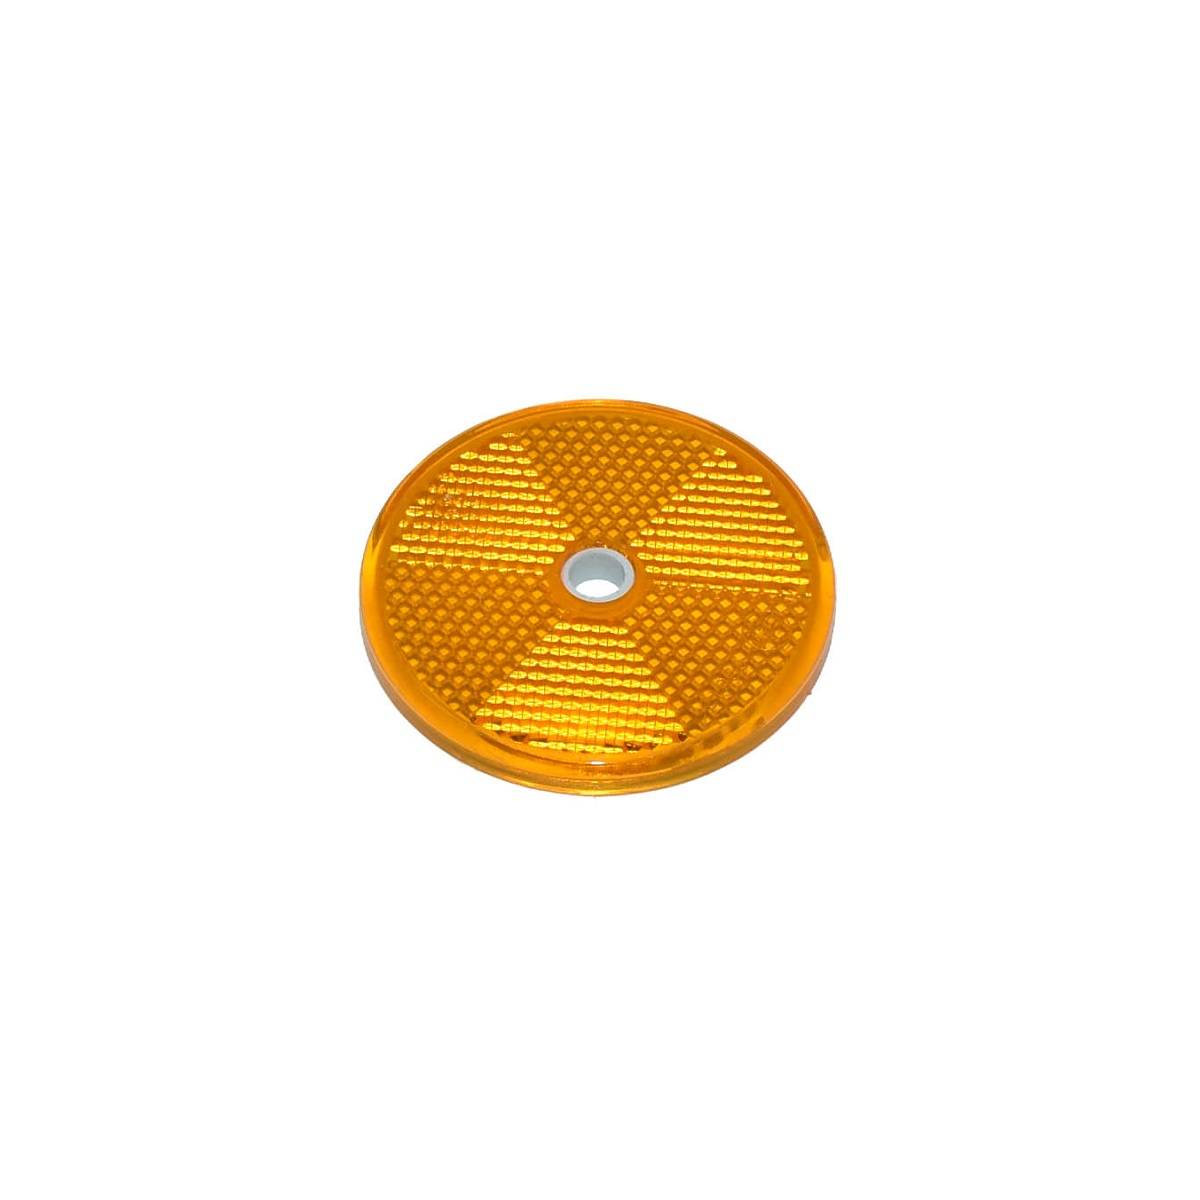 Reflektor orange selbstklebend 57x39mm kaufen